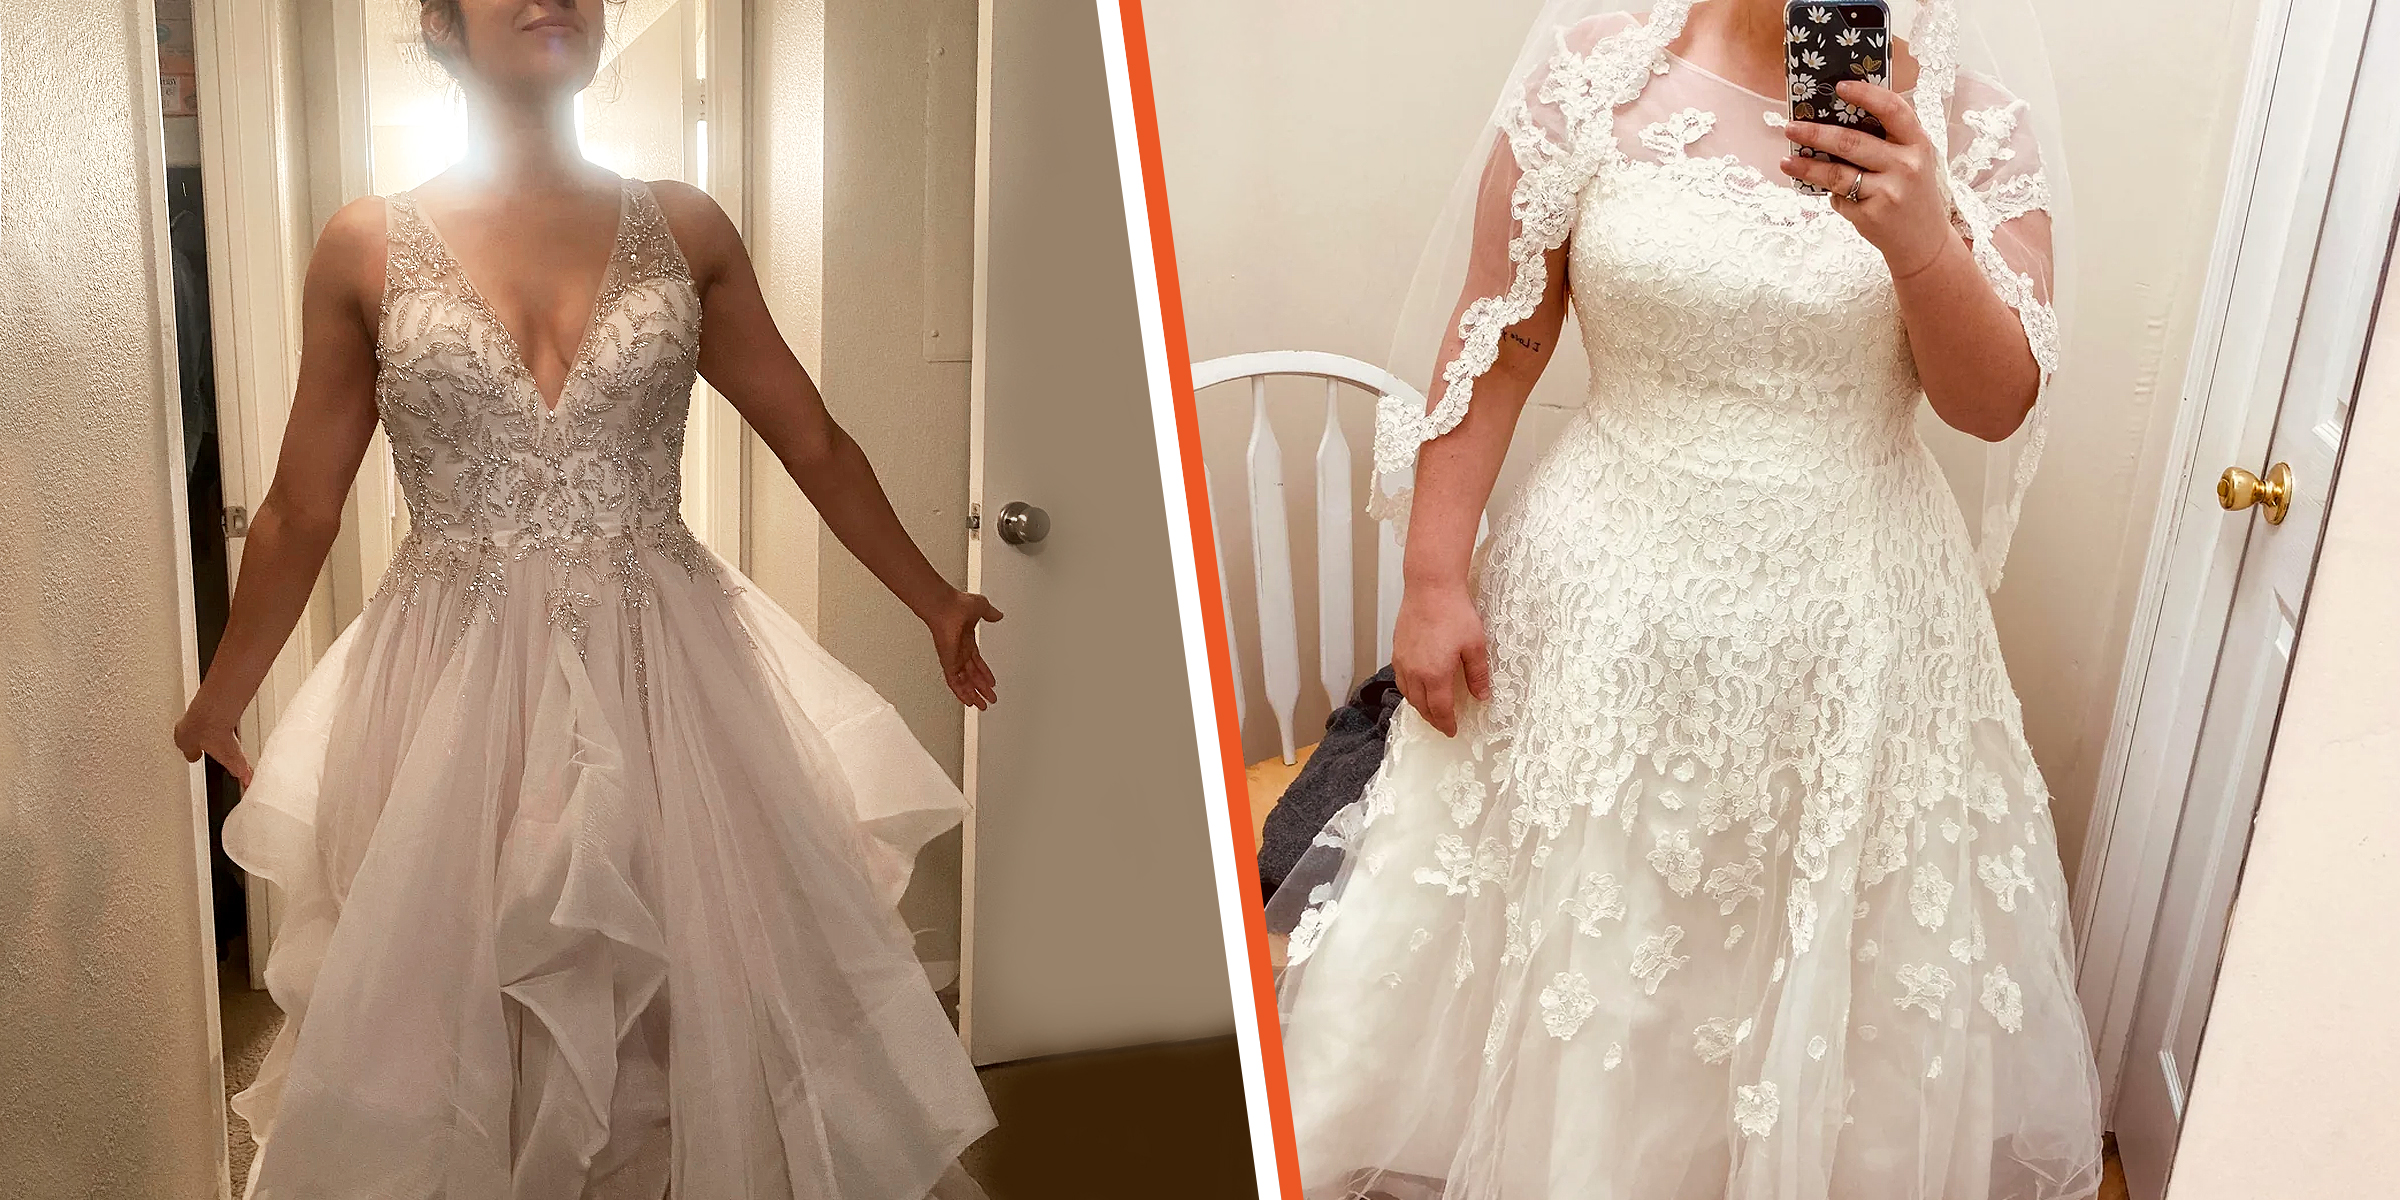 Reddit users wearing their thrift store wedding dresses in 2020 and 2021 | Source: Reddit.com/ThriftStoreHauls | Reddit.com/wedding